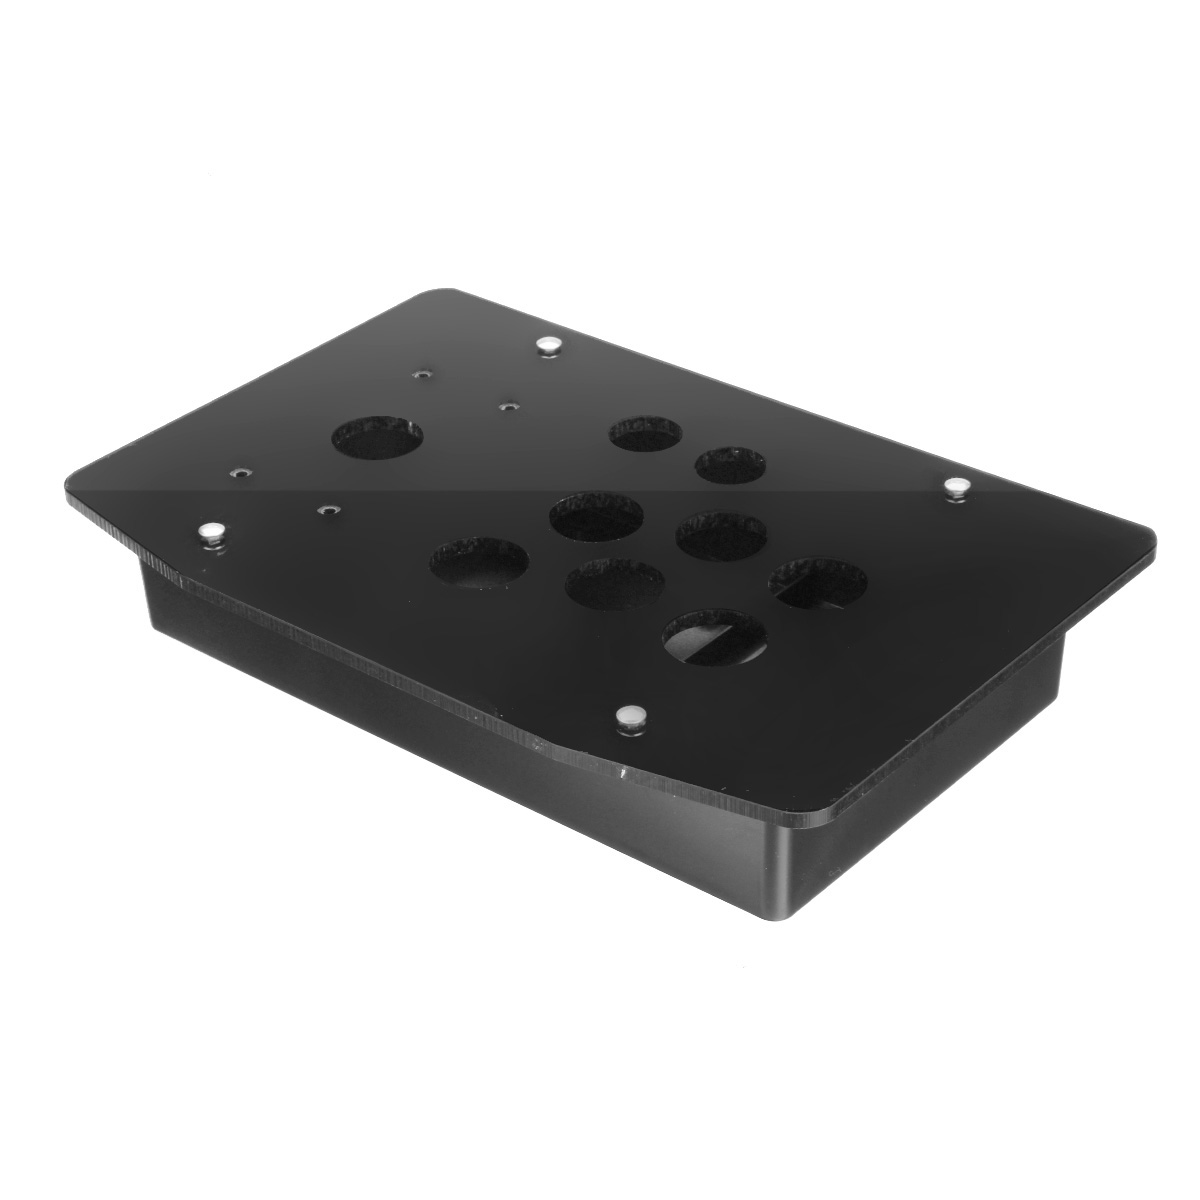 DIY Clear Black Acrylic Panel Case Sturdy Construction for Arcade Joystick Game Controller 10